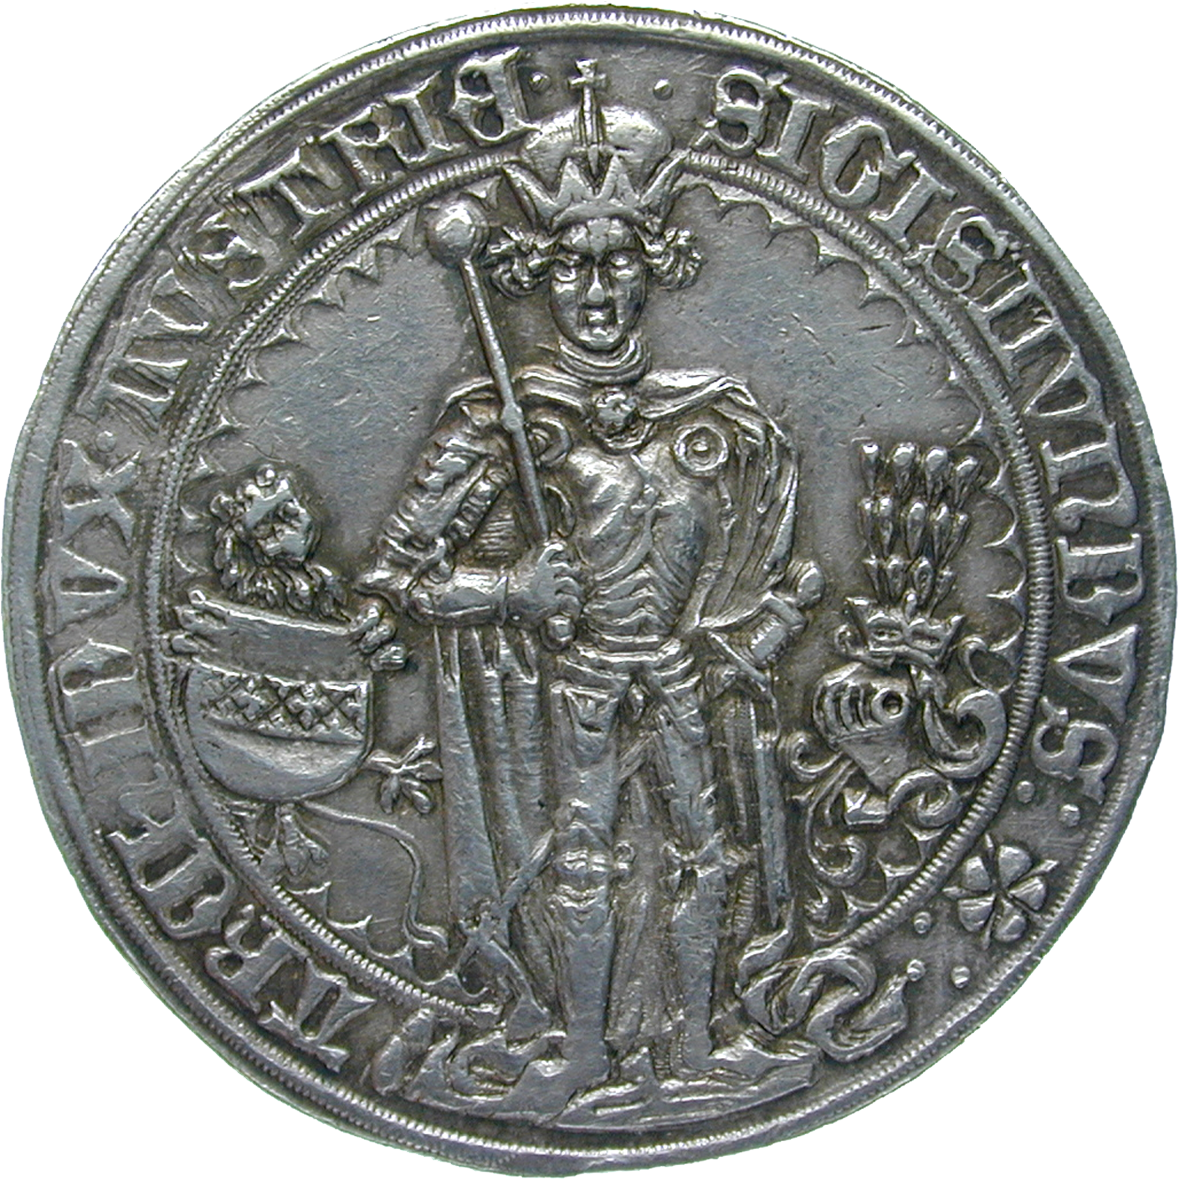 Holy Roman Empire, Archduchy of Austria, County of Tyrol, Sigismund, Guldiner 1486 (obverse)